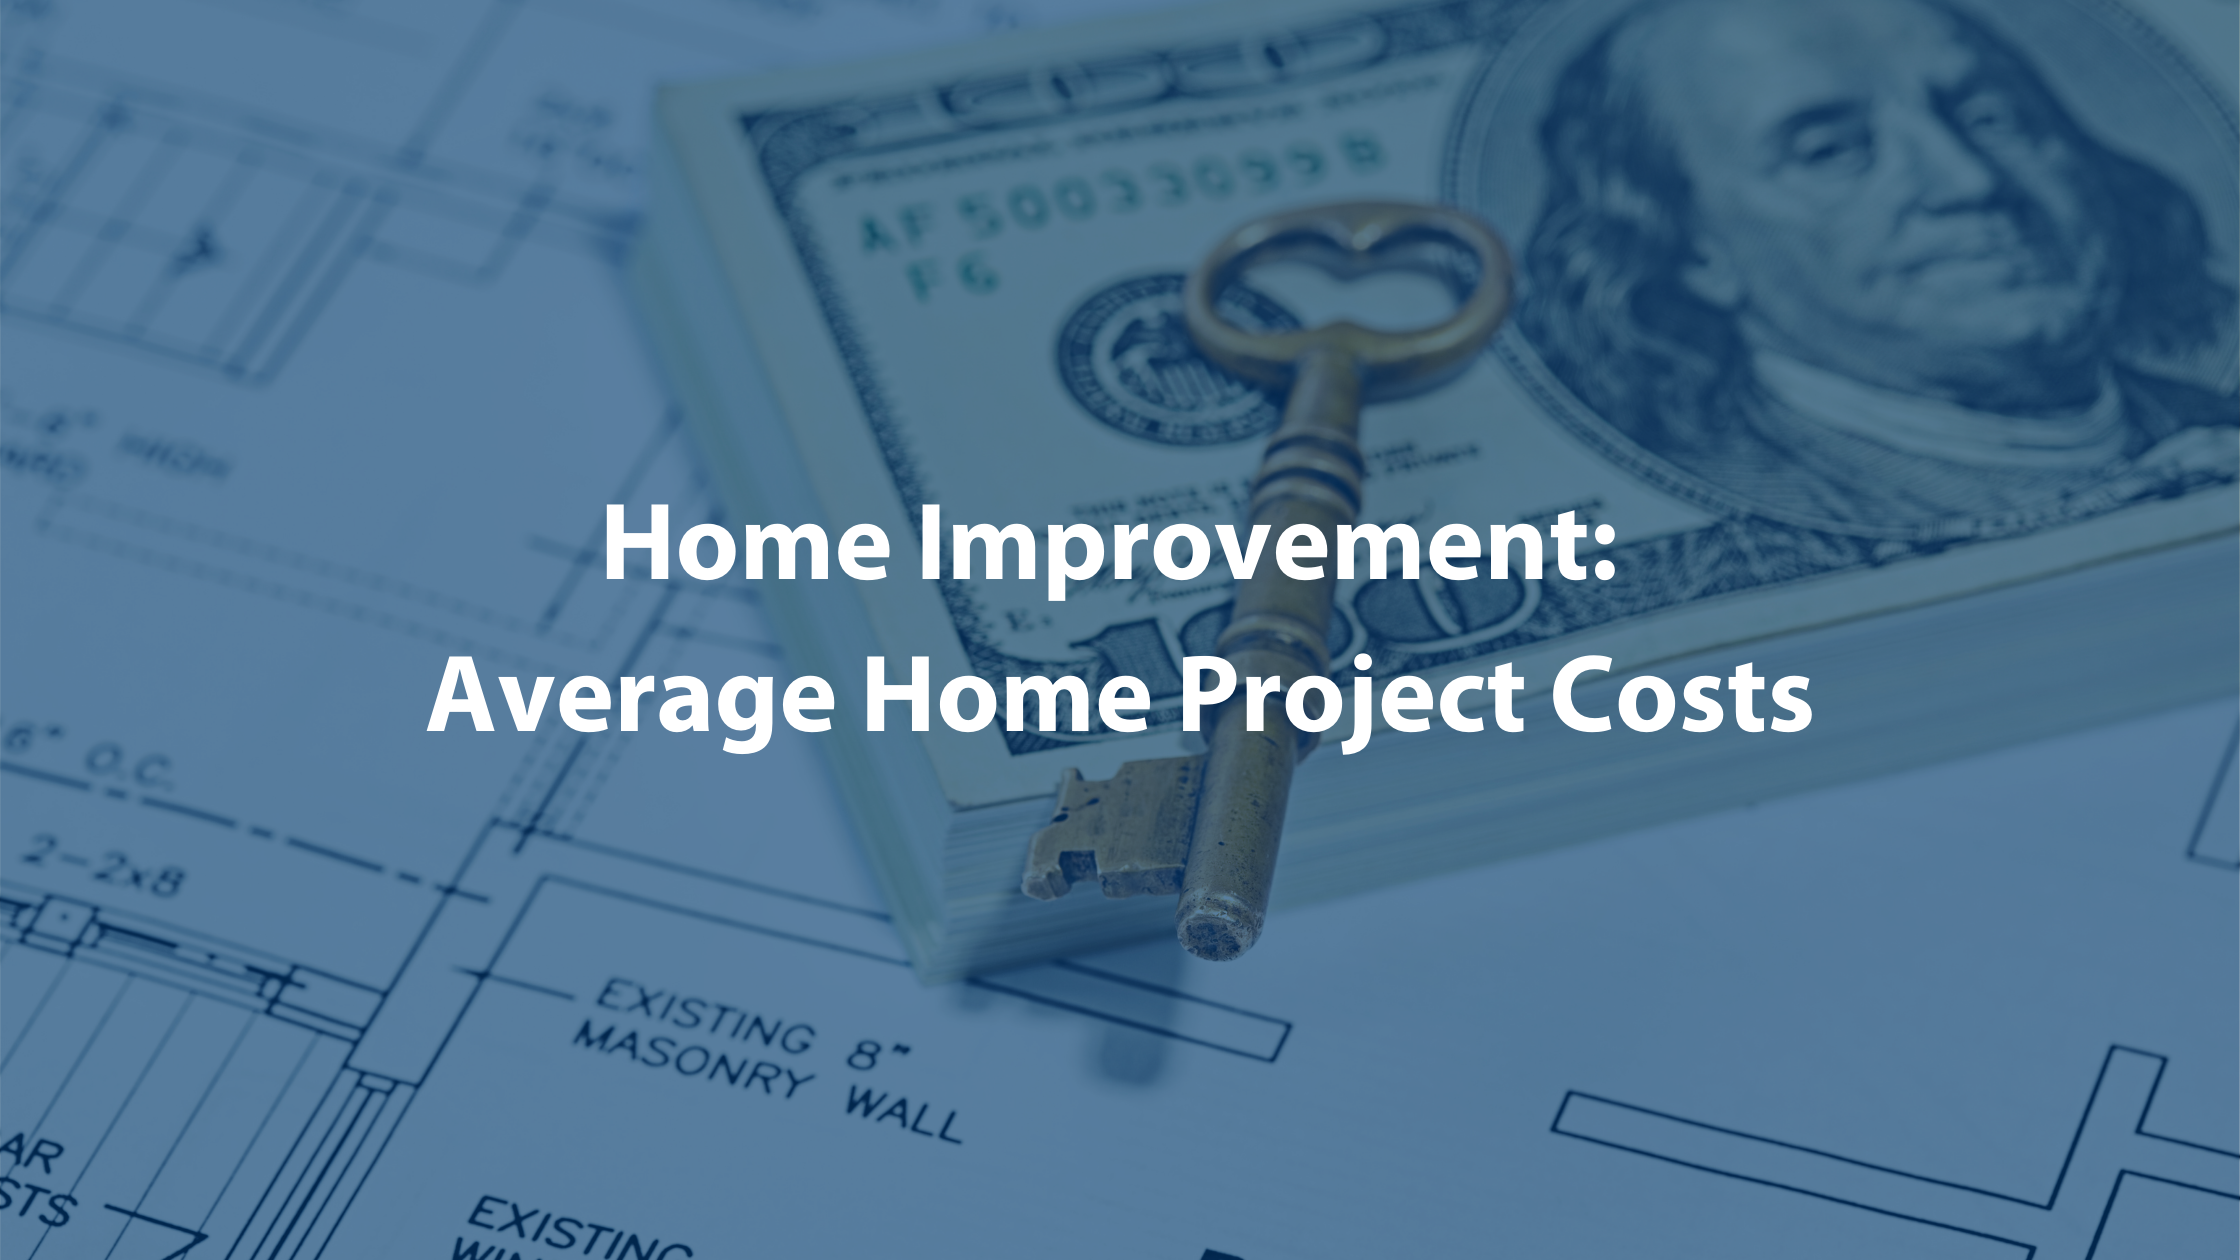 https://handymanconnection.com/wp-content/uploads/2021/05/Home-Improvement_-Average-Home-Project-Costs.png